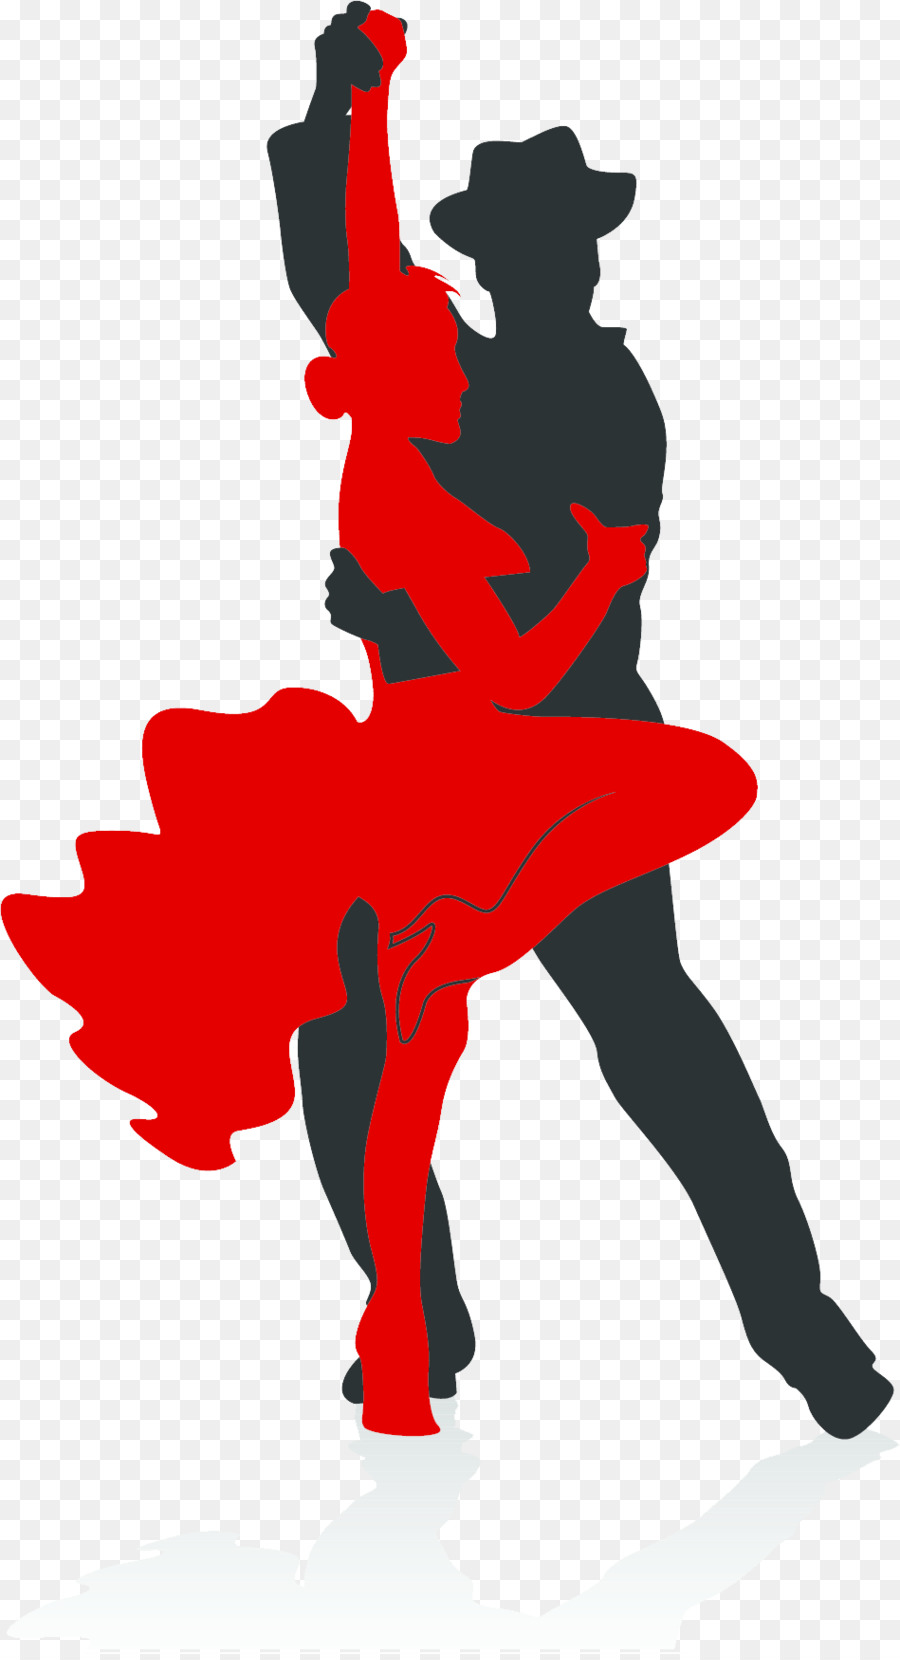 Ballroom dance Tango Silhouette - dance png download - 949*1745 - Free Transparent Ballroom Dance png Download.